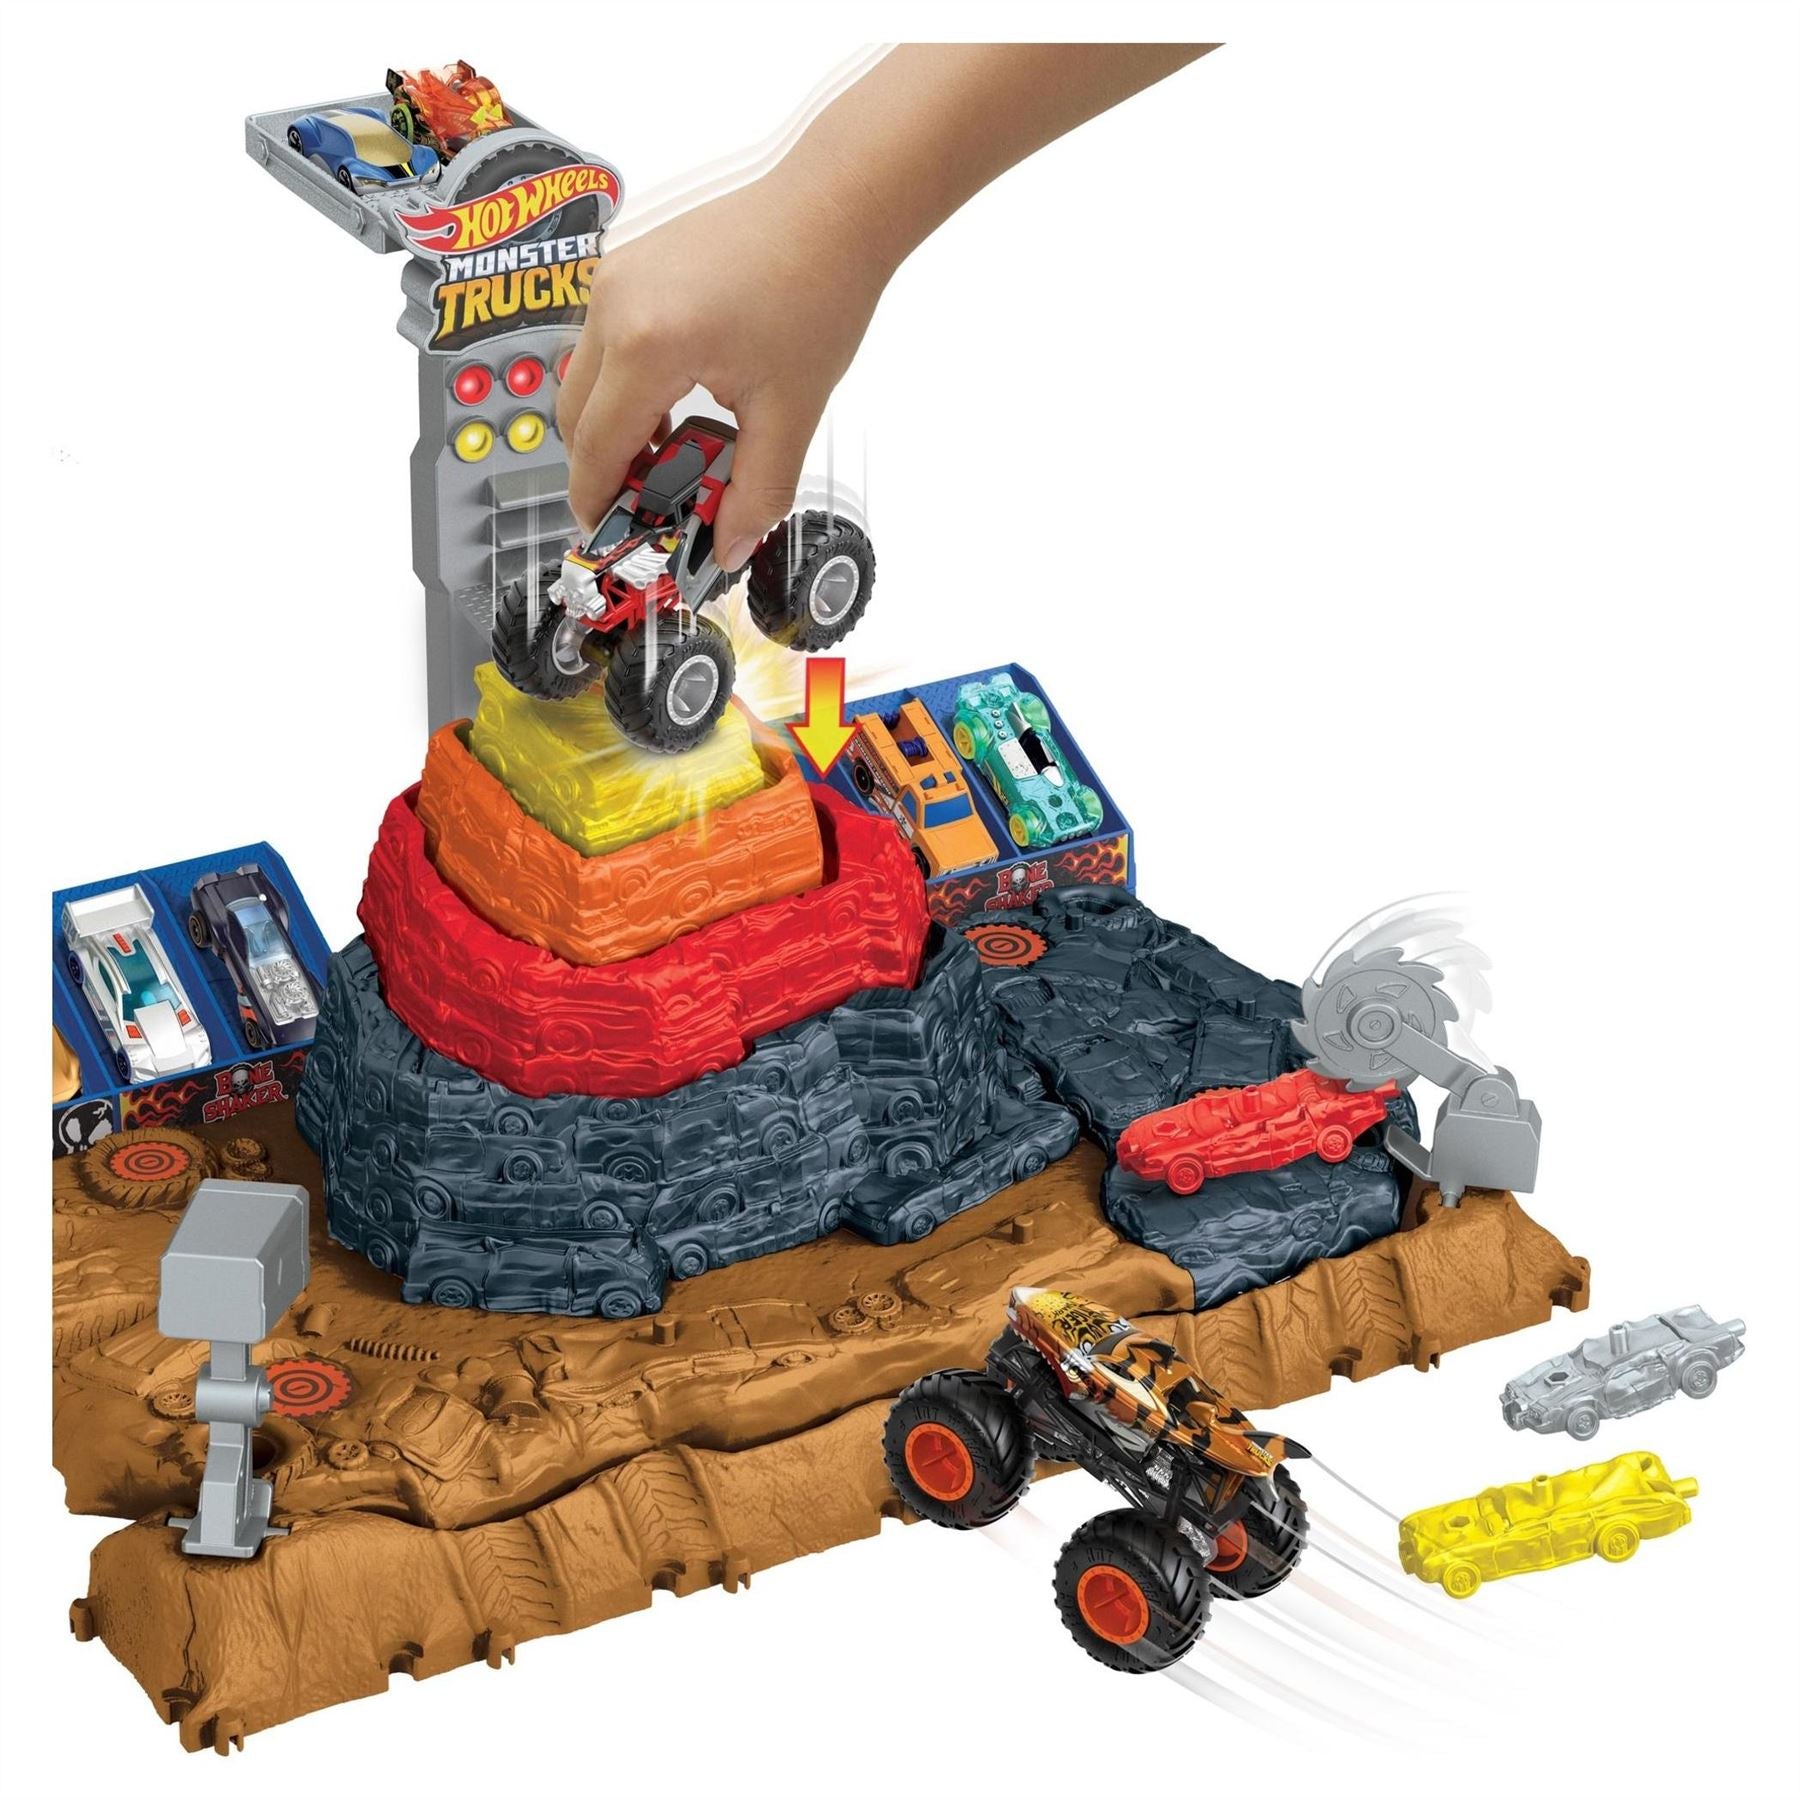 Hot Wheels Monster Trucks Arena Ultimate Crush Yard Play Set